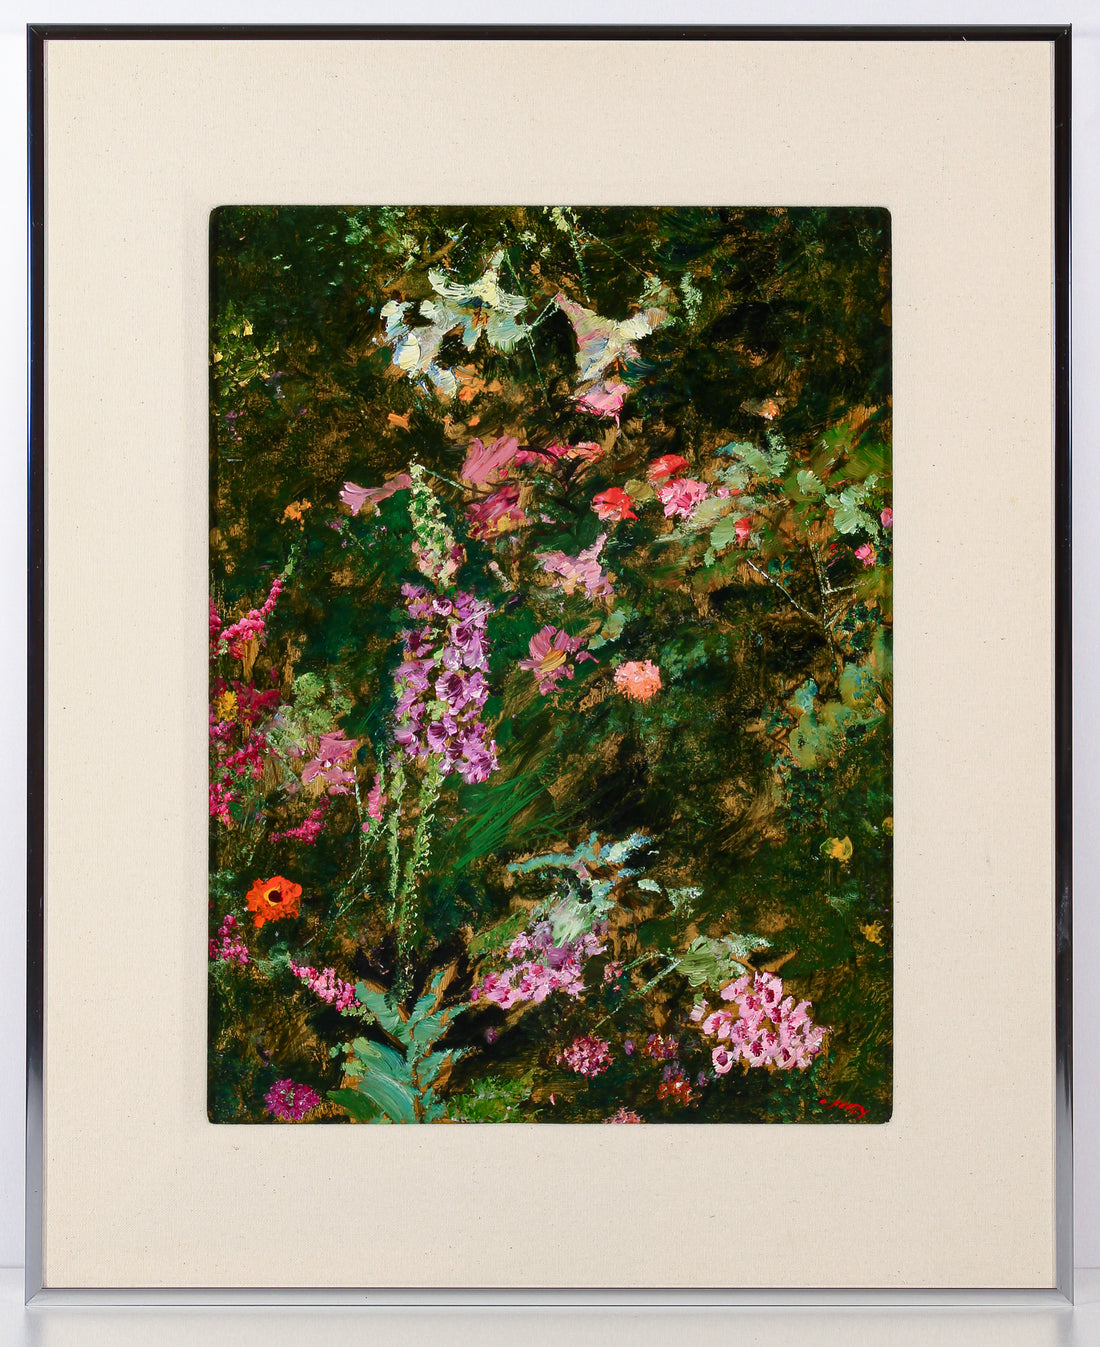 Richard Jerzy - Untitled Florals - Oil on Board